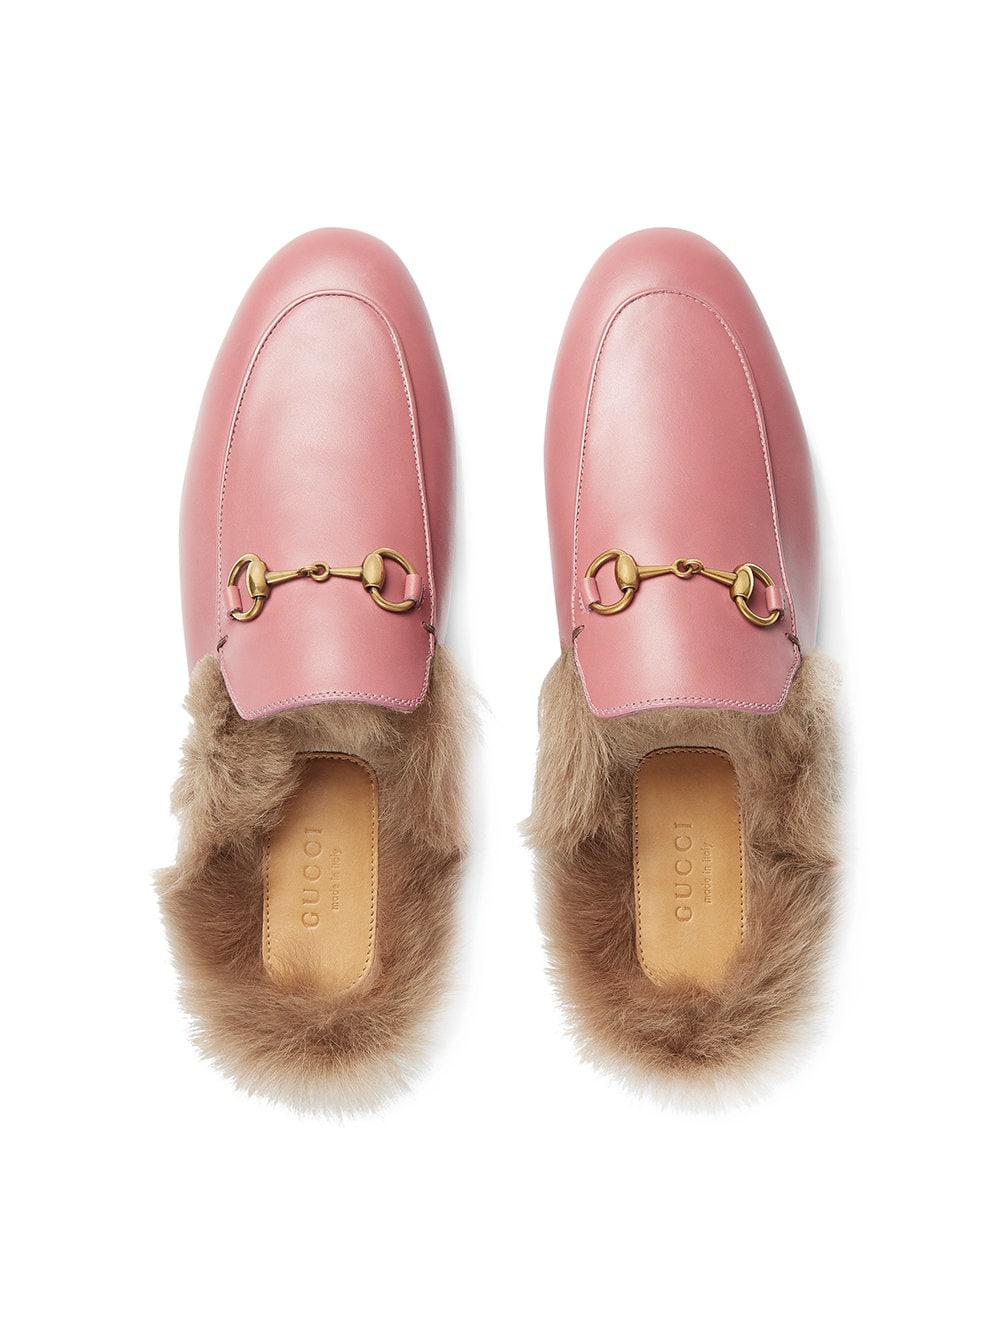 gucci pink loafers Off 67% - www.naveenrajhall.com